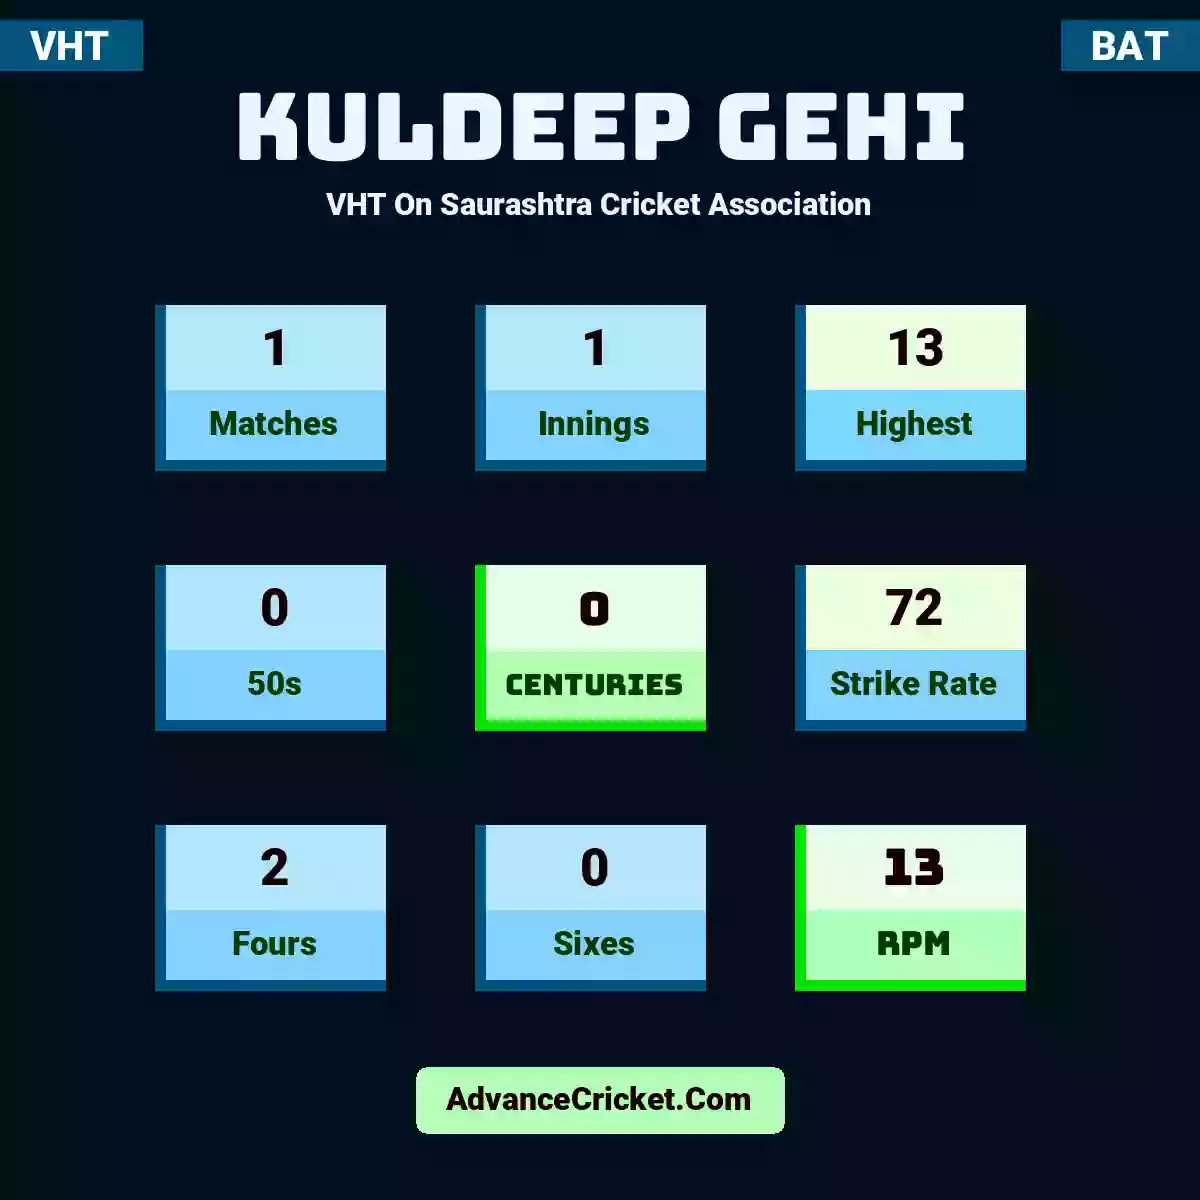 Kuldeep Gehi VHT  On Saurashtra Cricket Association, Kuldeep Gehi played 1 matches, scored 13 runs as highest, 0 half-centuries, and 0 centuries, with a strike rate of 72. K.Gehi hit 2 fours and 0 sixes, with an RPM of 13.